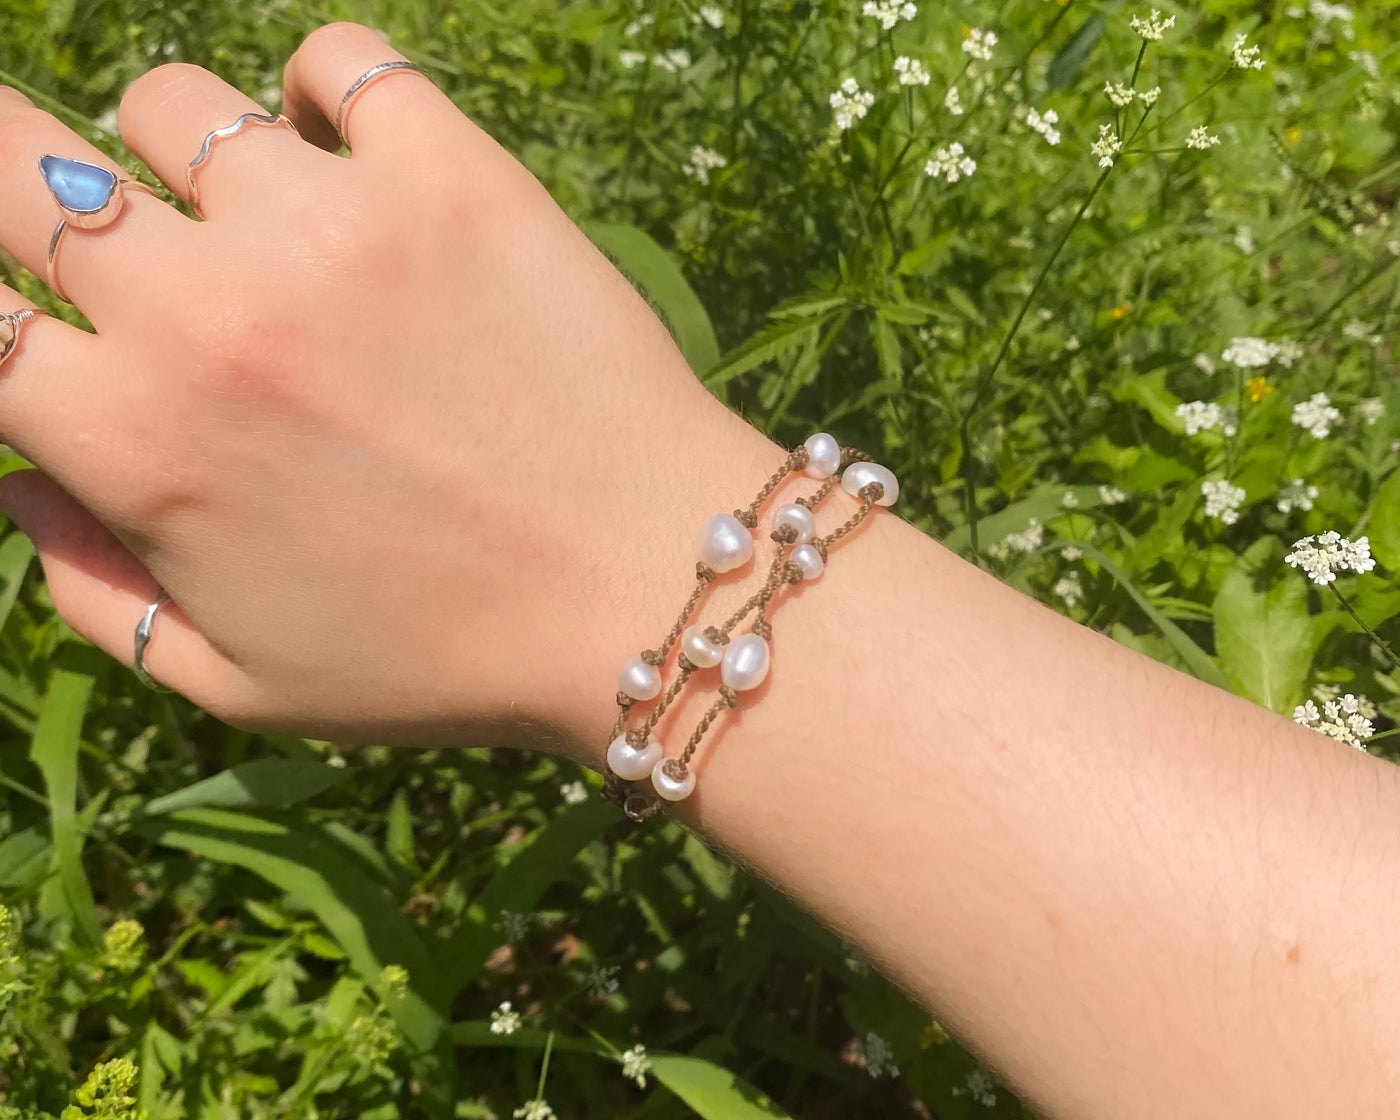 Tula Blue's Journey Bracelet in white pearl on model wrist in front of greenery